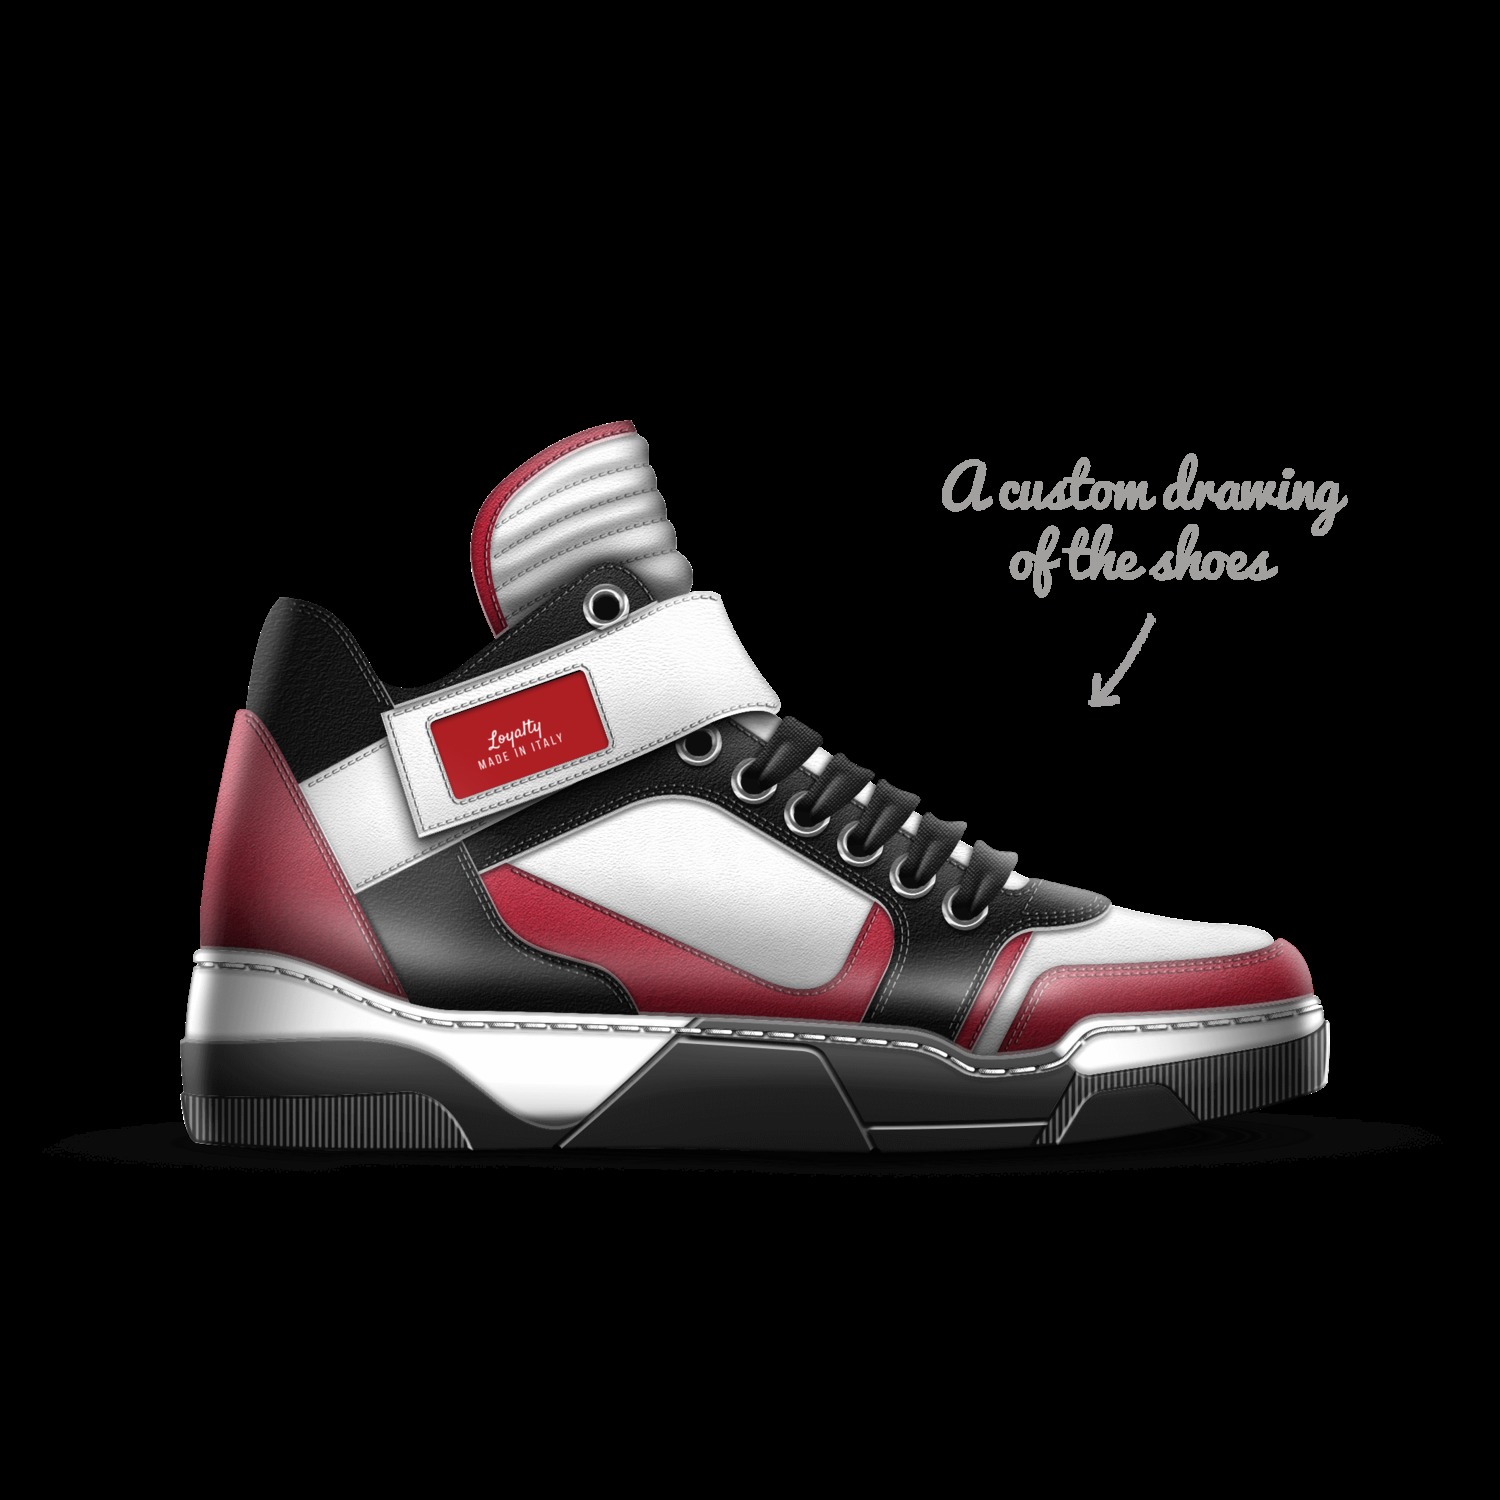 A Custom Shoe concept by Benjamin Gonzalez